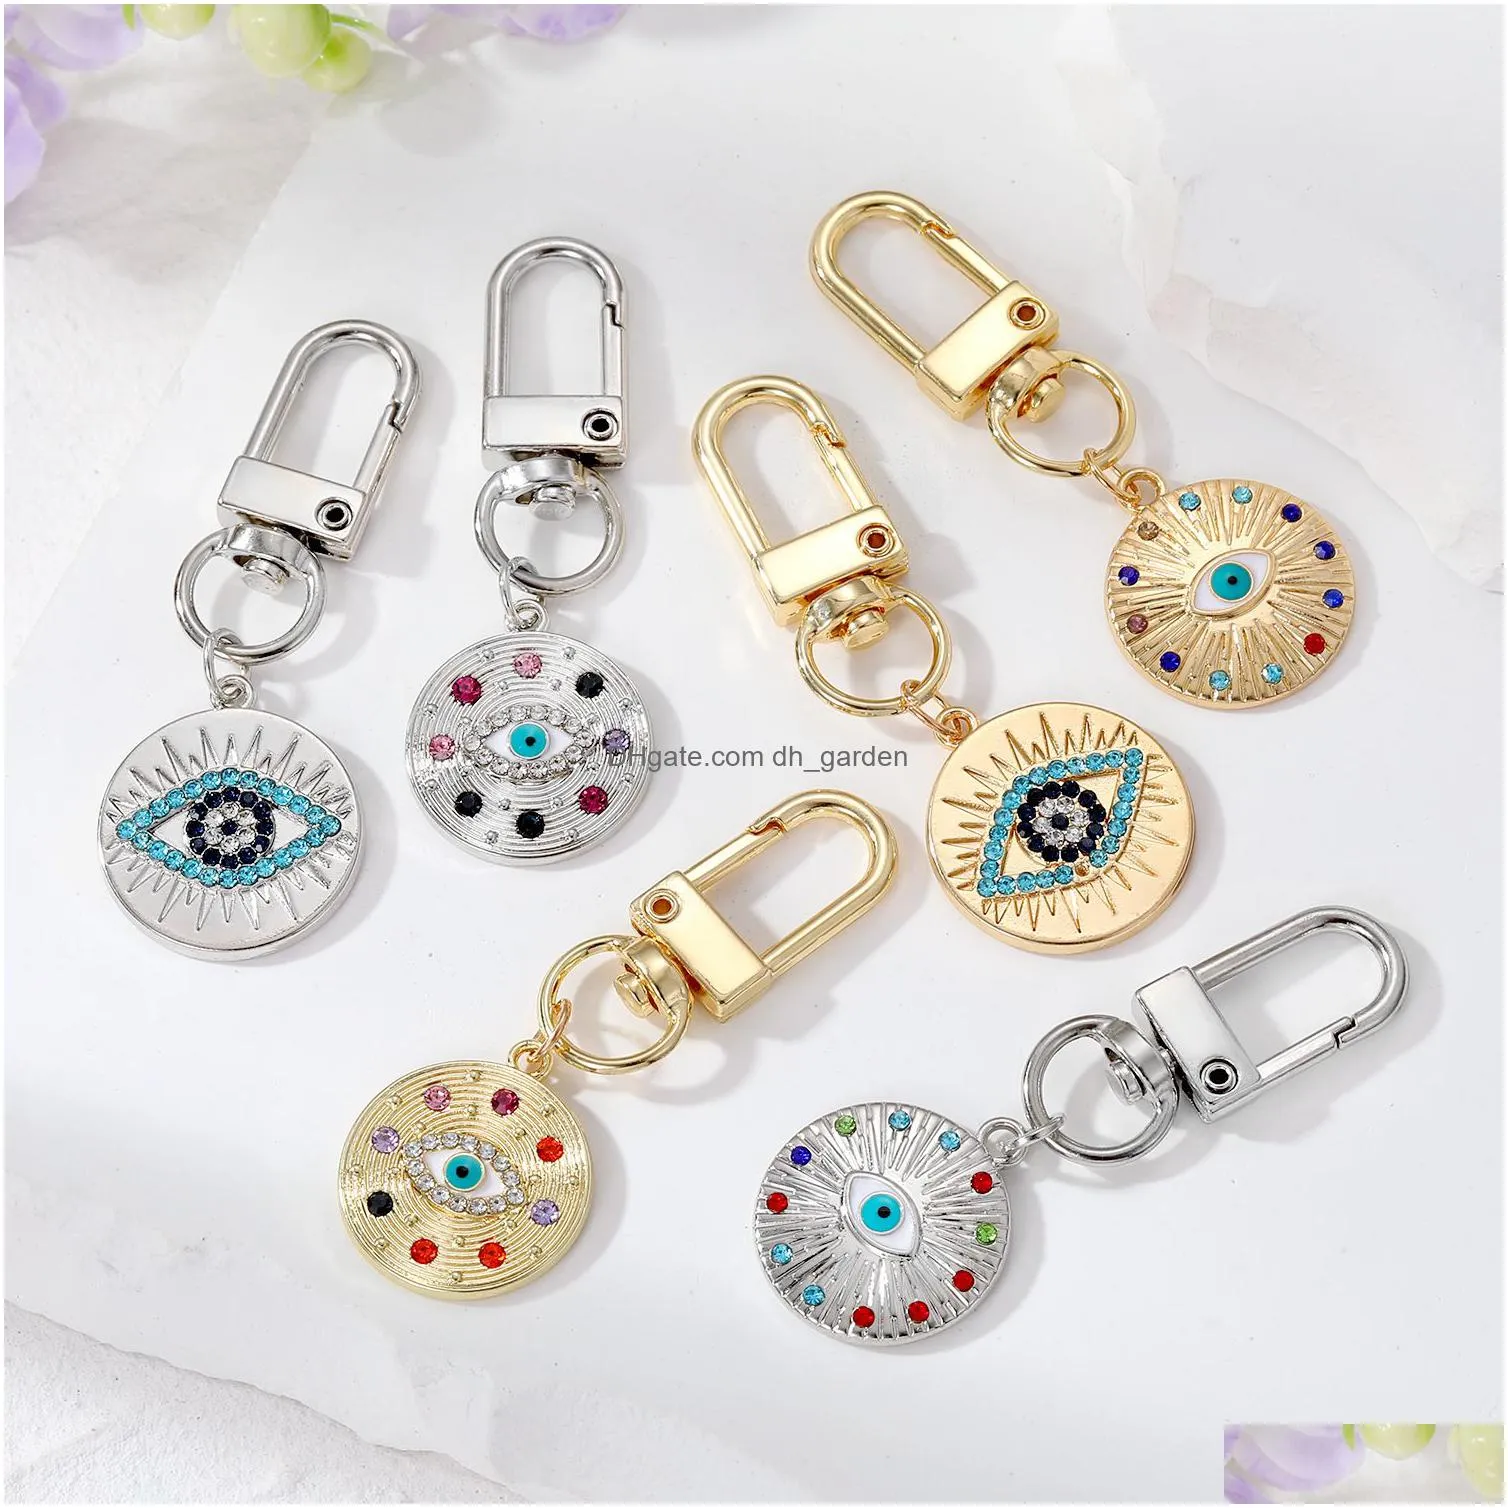 rhinestone evil eye keychain key ring for women men blue eye charms pendant bag car key accessories